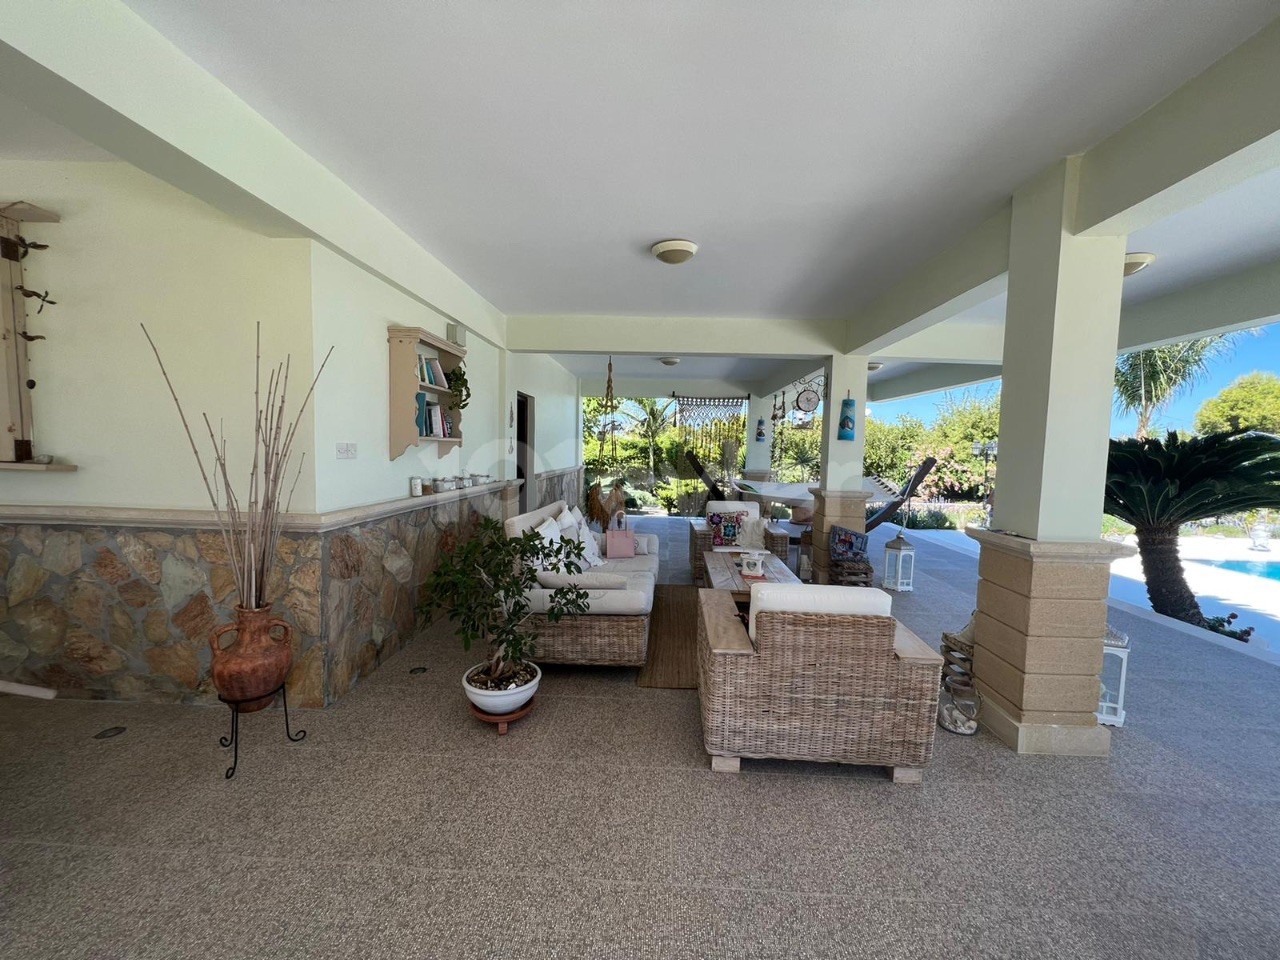 3+1 Villa zum Verkauf in Kyrenia Lapta, Türkei mit privatem Pool ** 